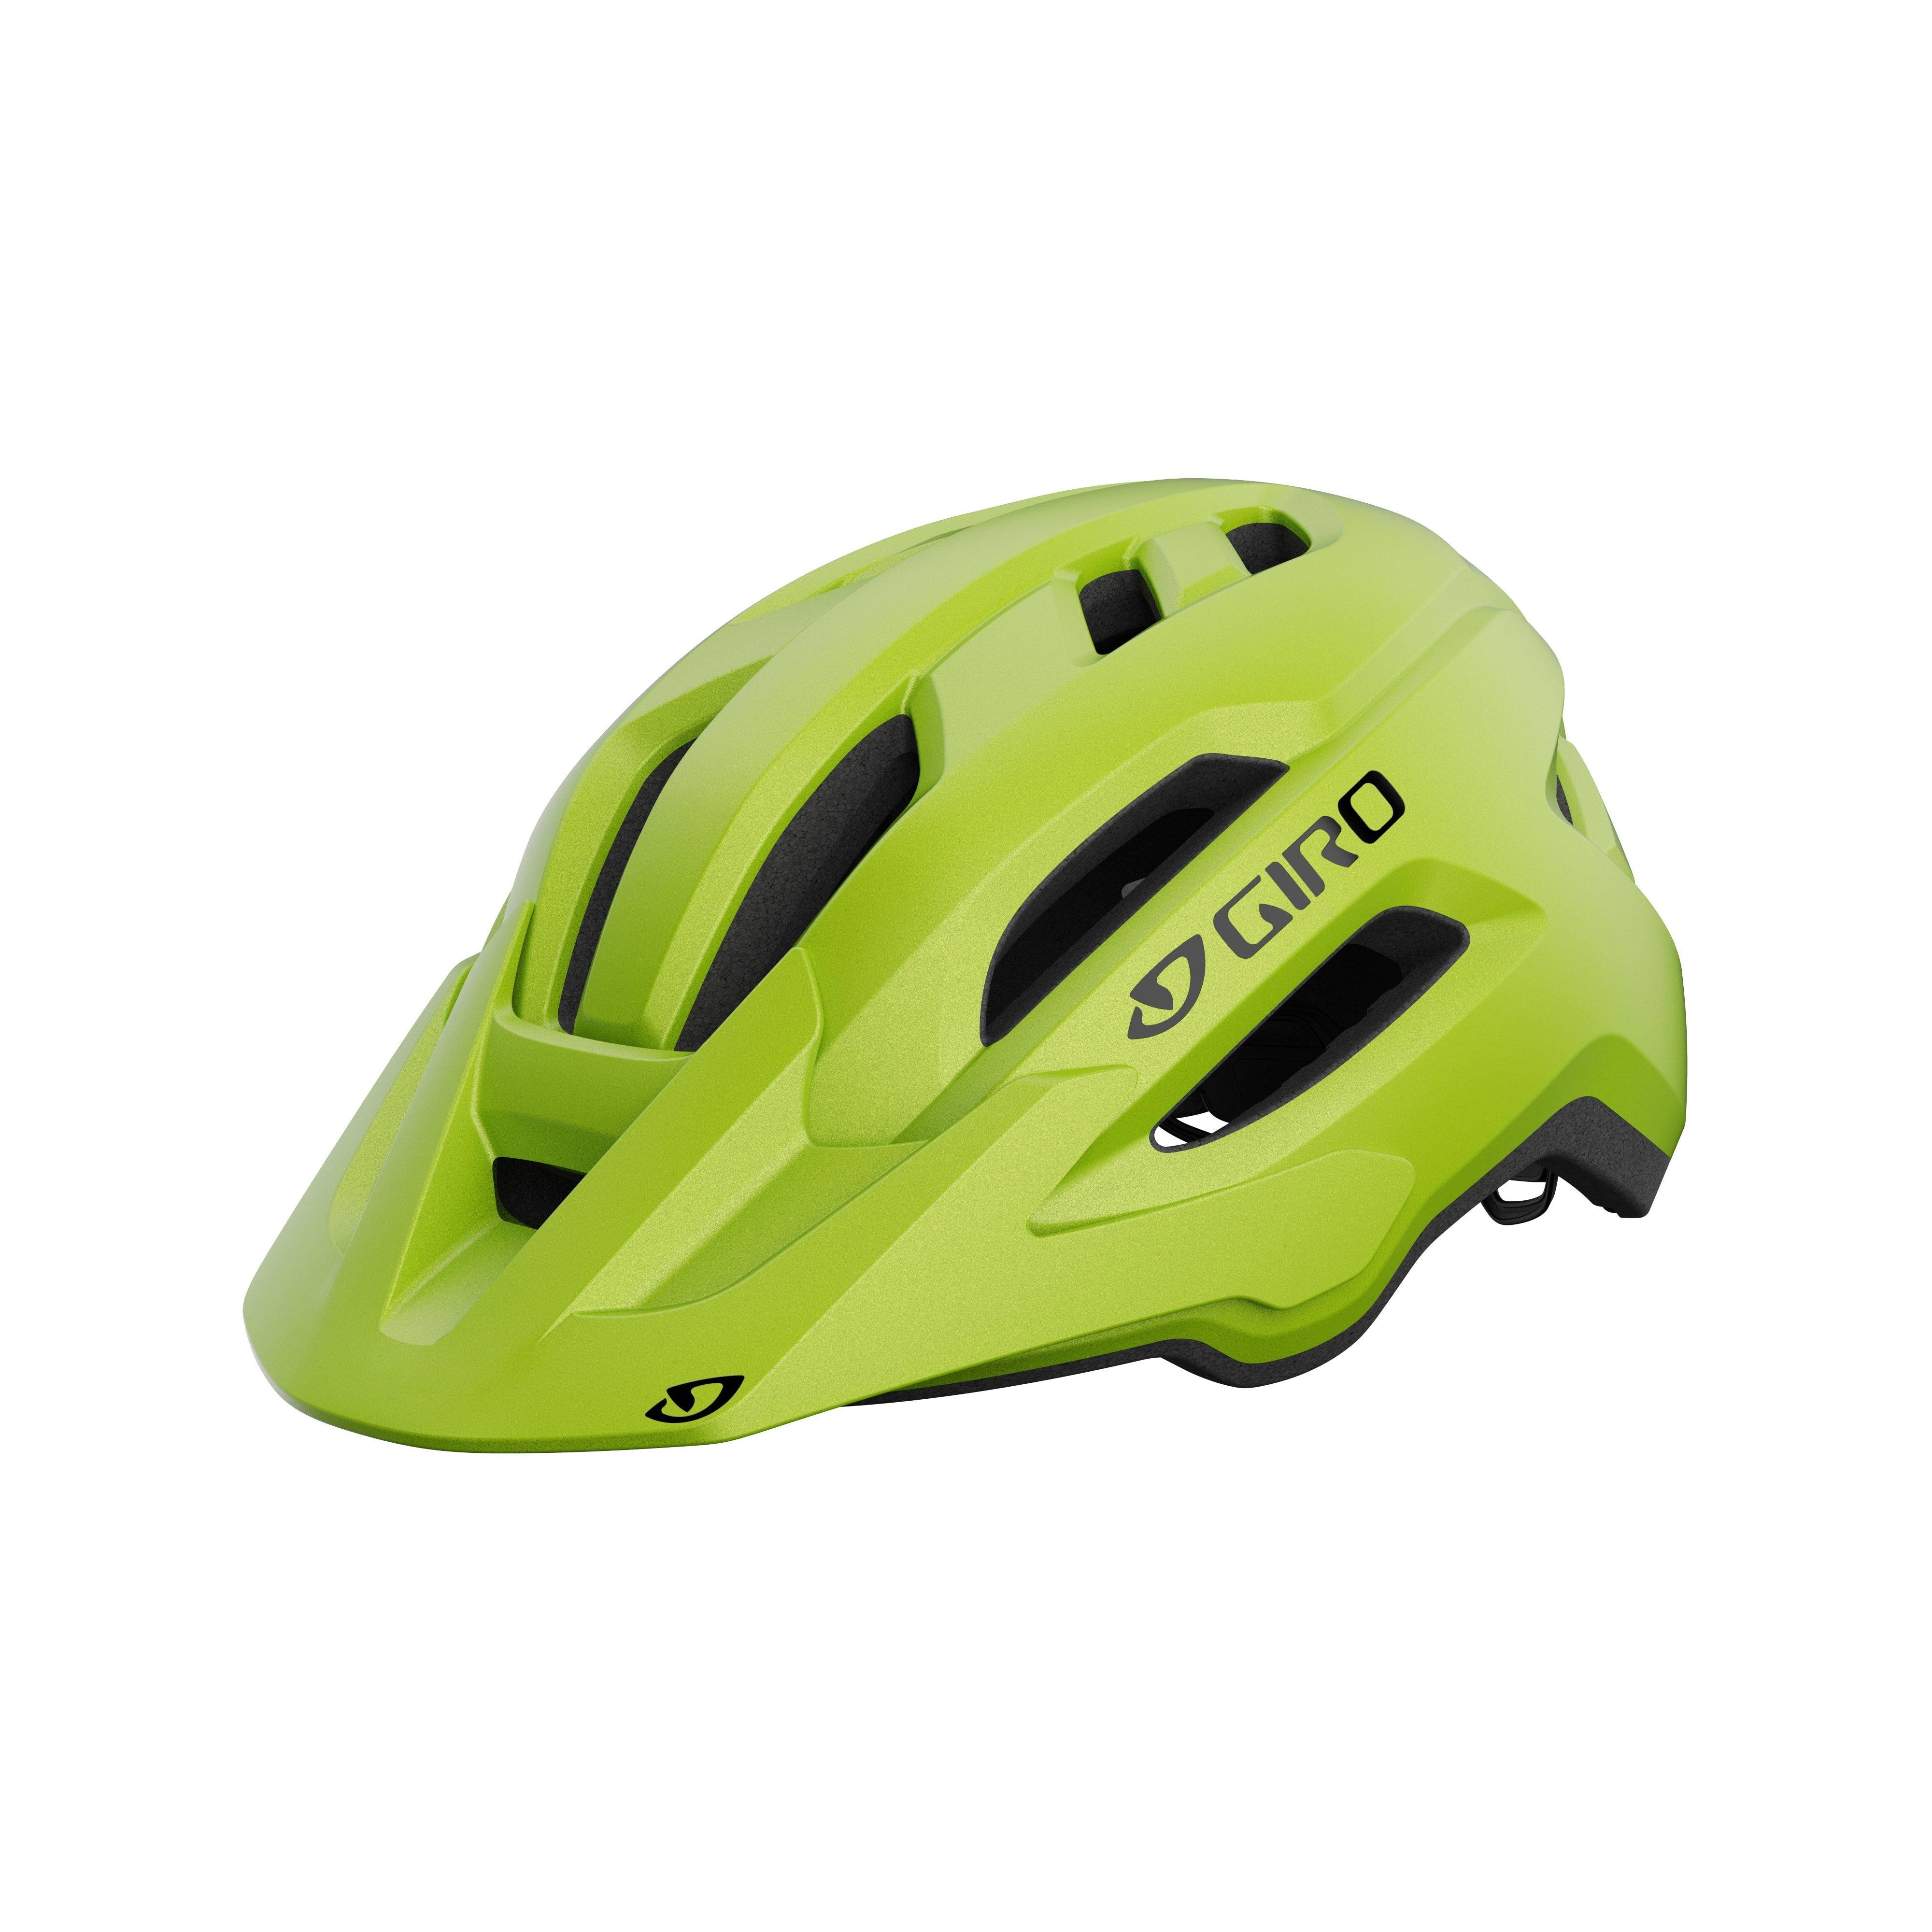 Giro Fixture 2 MIPS Helmet's Breezy Ventilation Roc Loc Sport with EPS Liner, Ano Lime / Universal Adult